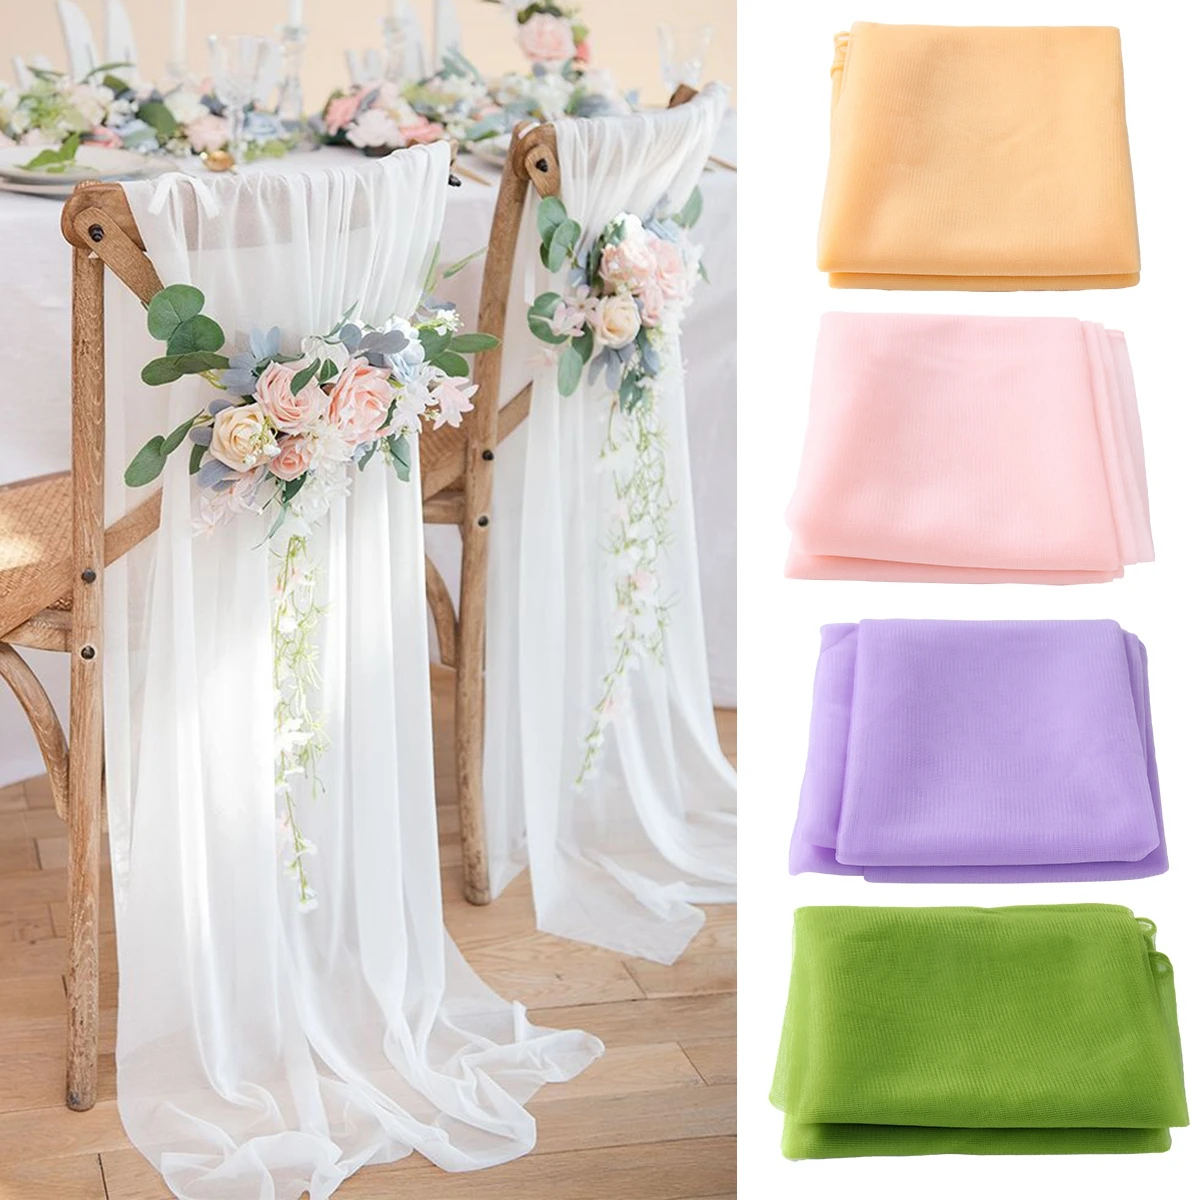 

Wedding Tulle Roll Rustic Wedding Organza Sheer Fabric For Birthday Party decoration Backdrop Wedding Arch Organza Chair Sashes